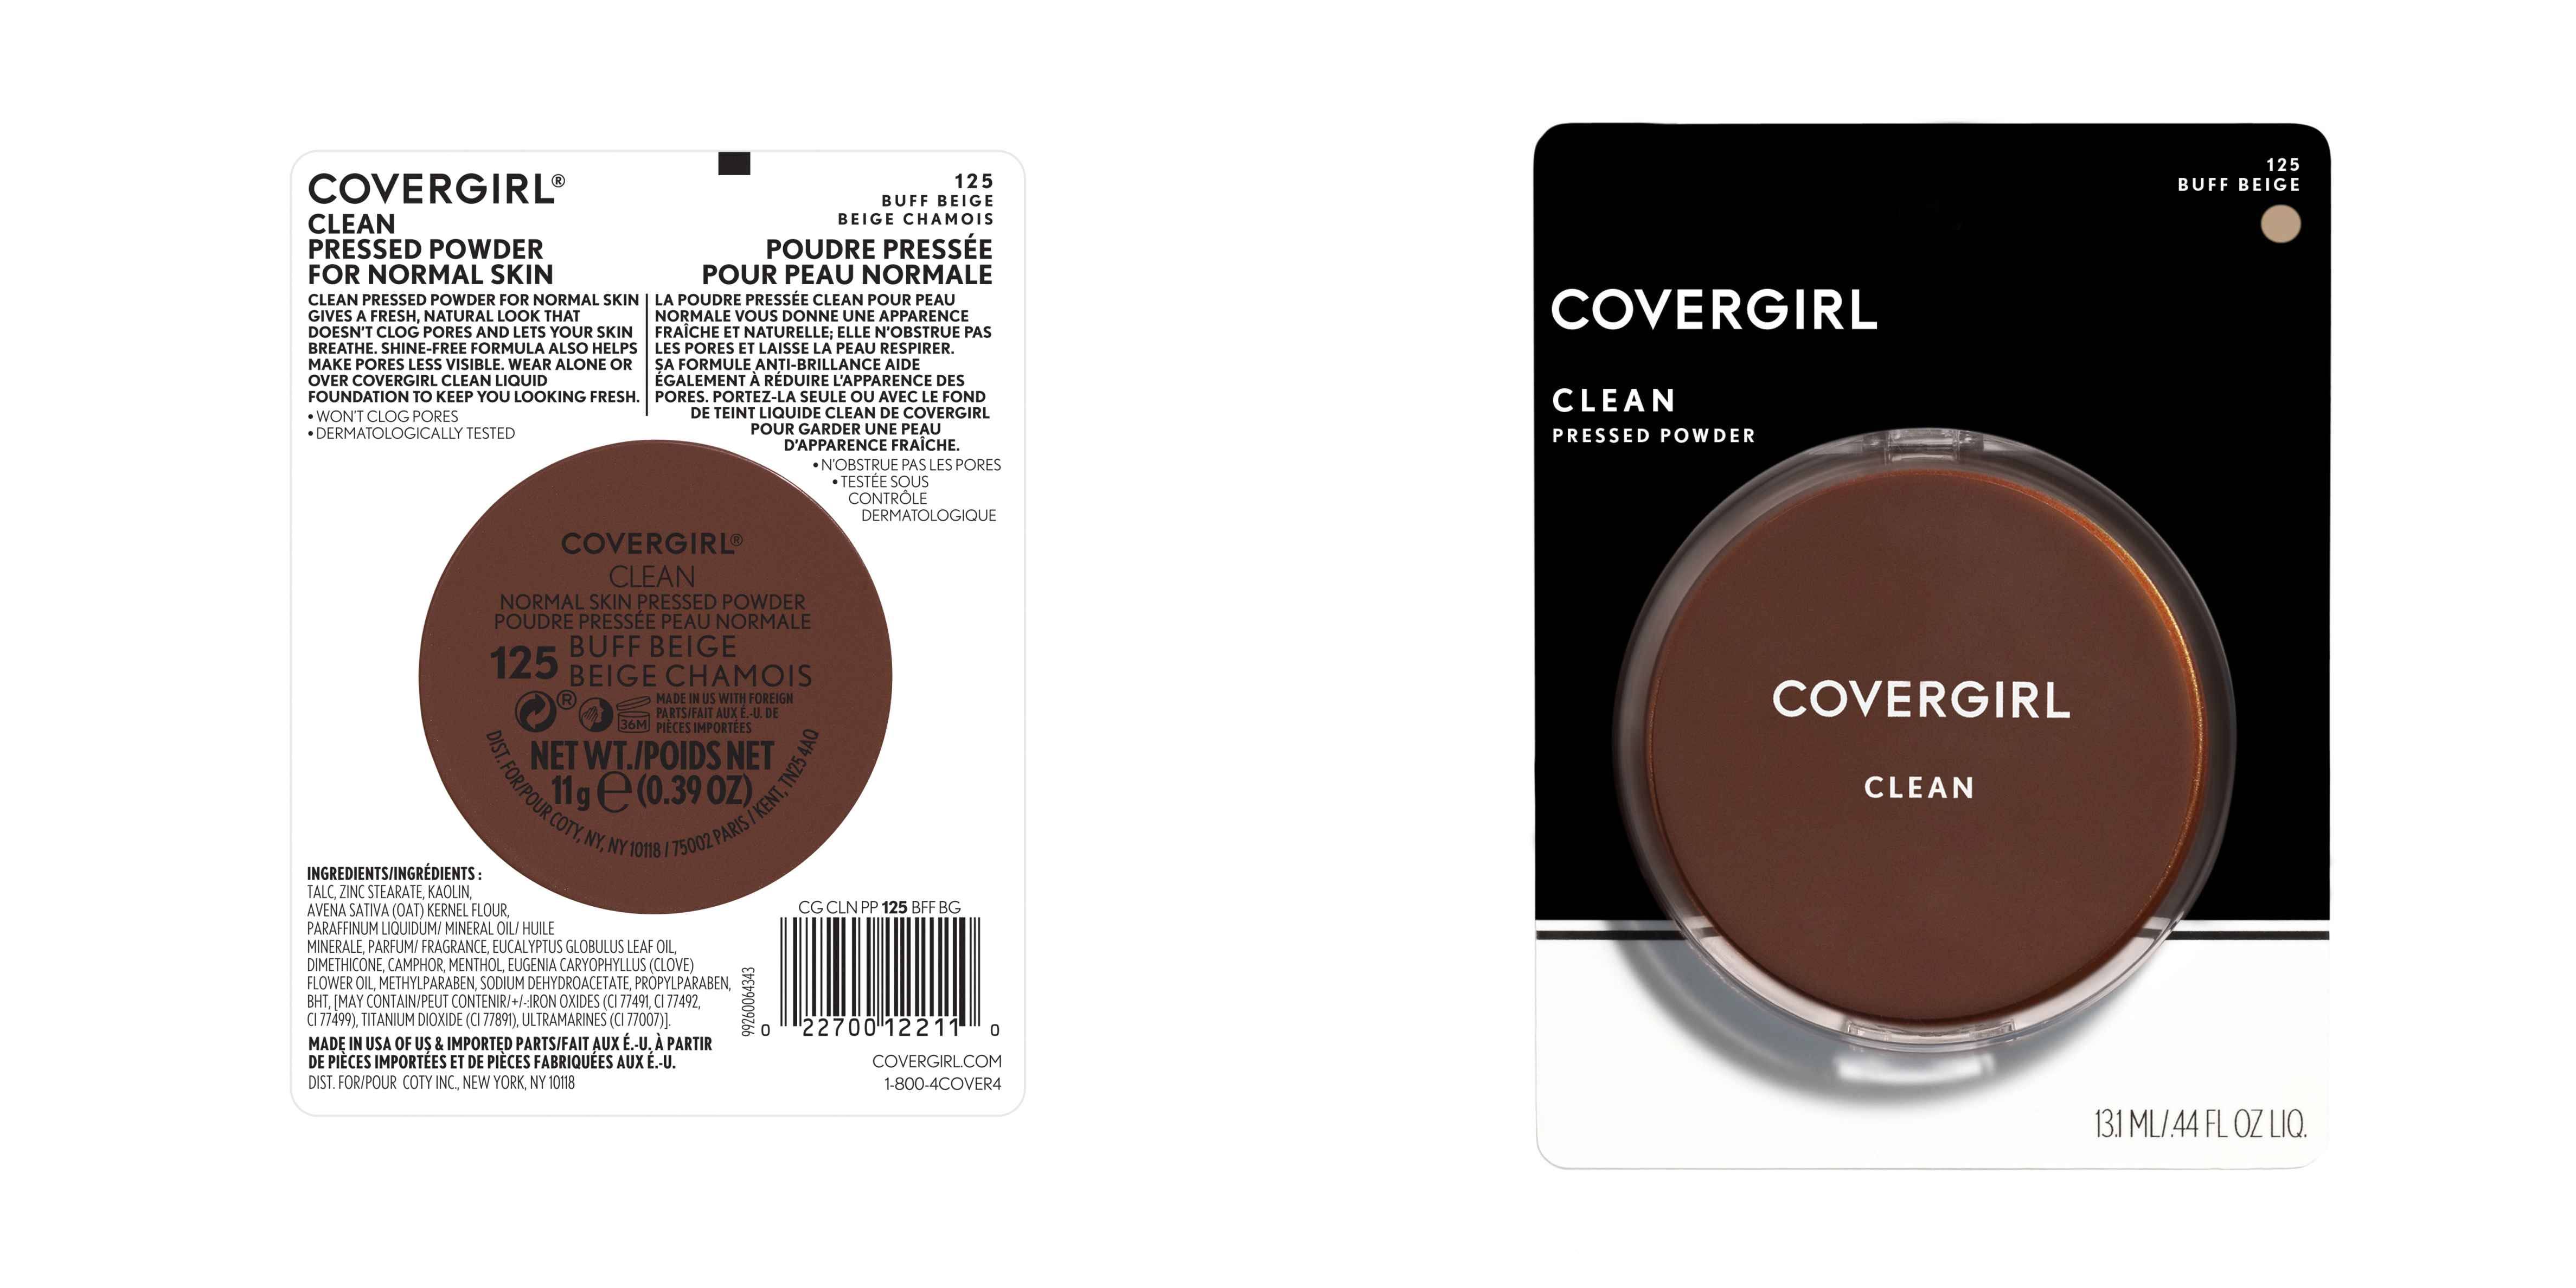 Covergirl Clean Pressed Powder - Normal Skin, Buff Beige 125